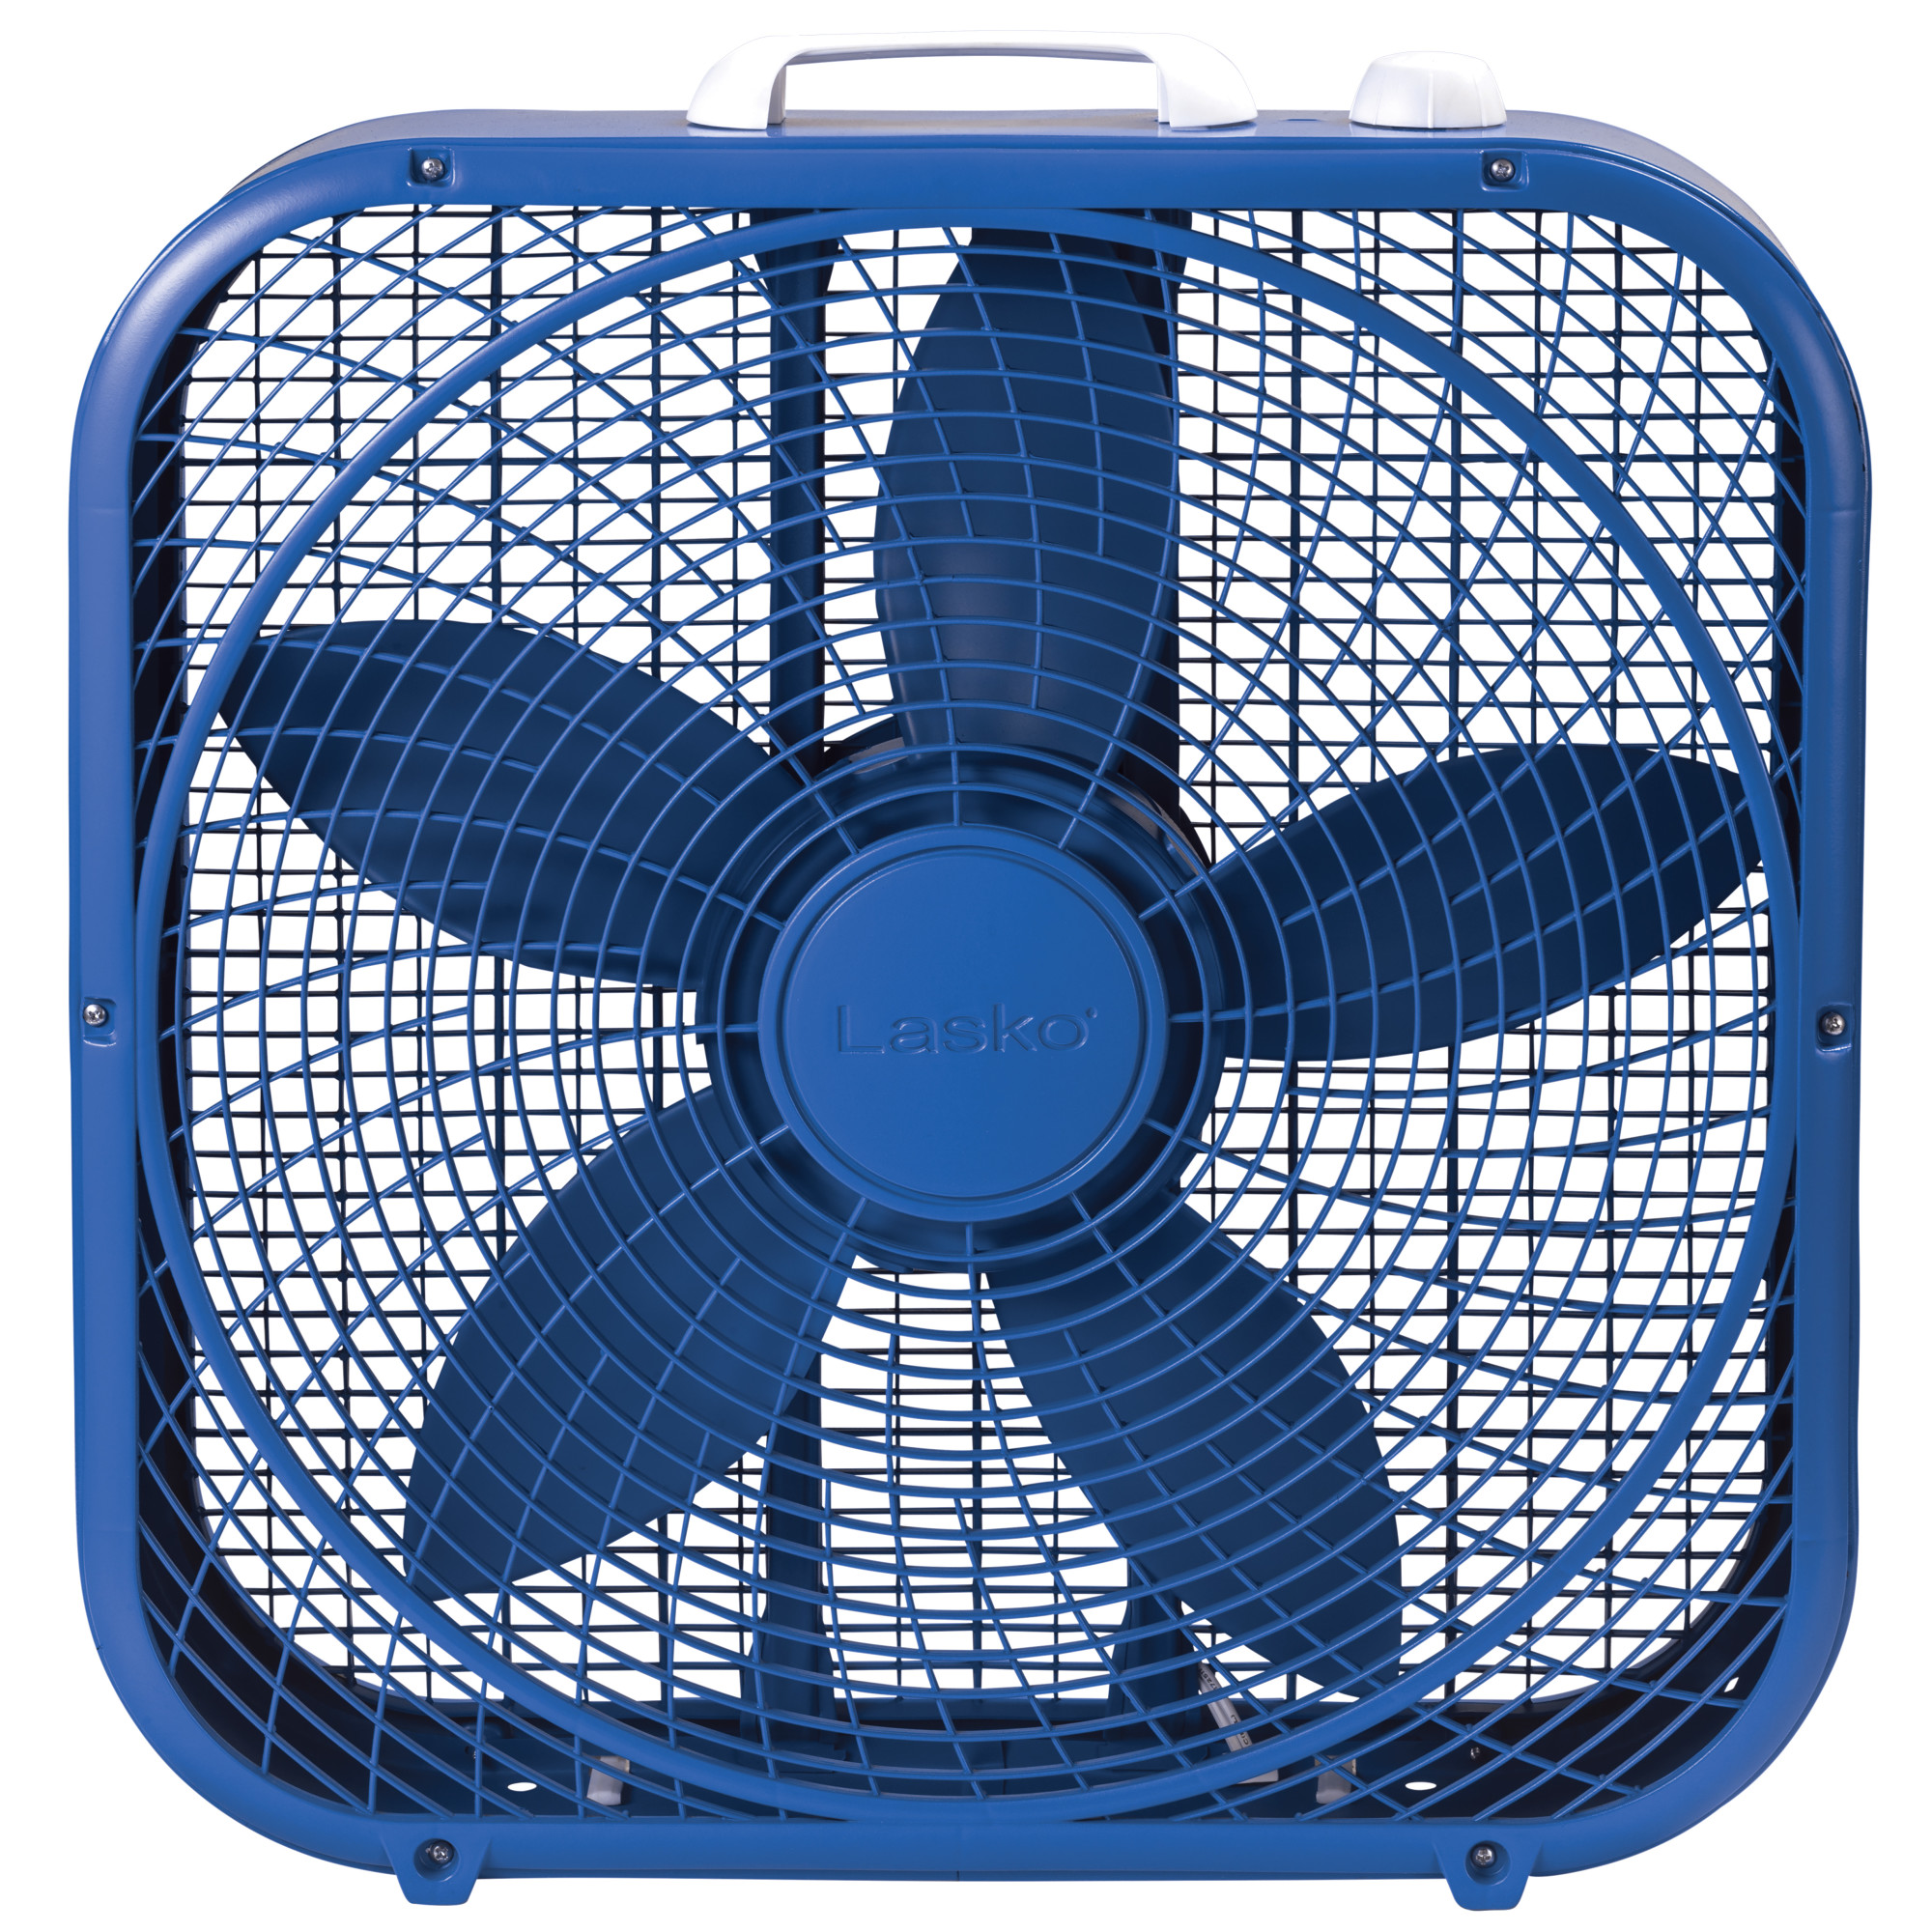 Lasko Cool Colors 20" Energy Efficient Box Fan, 3 Speeds, 22.5" H, Blue, B20308, New - image 2 of 6